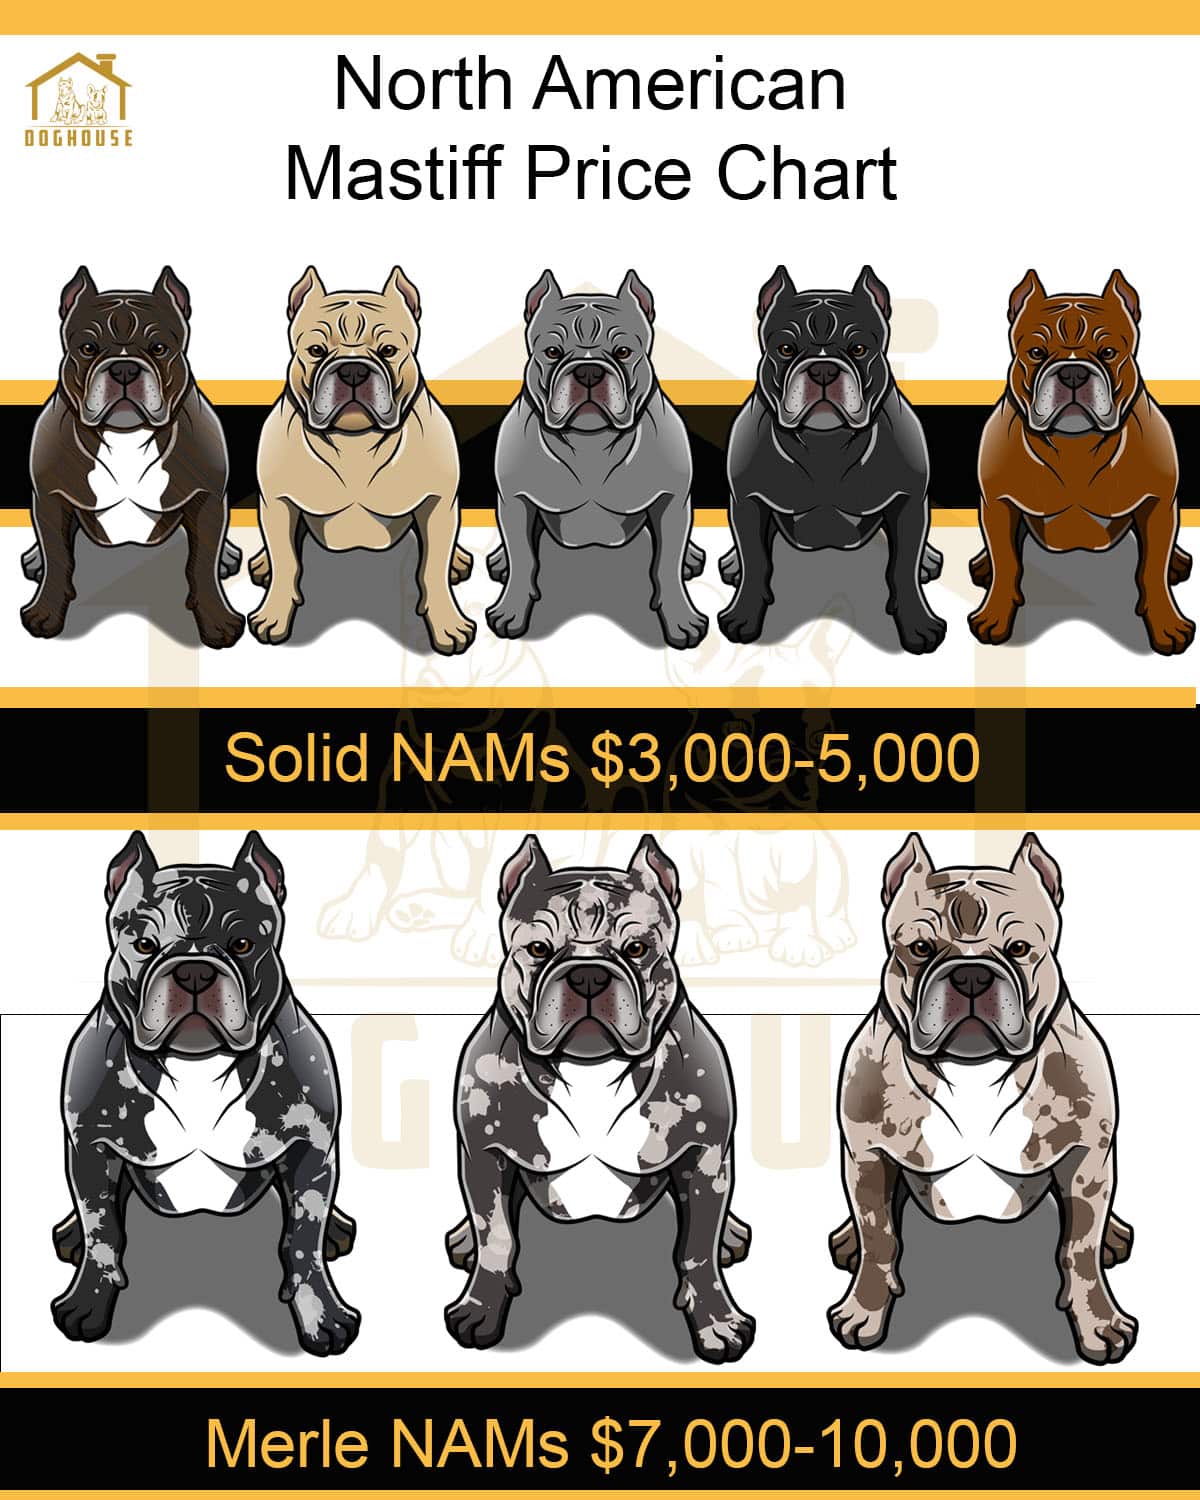 North American Mastiff Price Chart